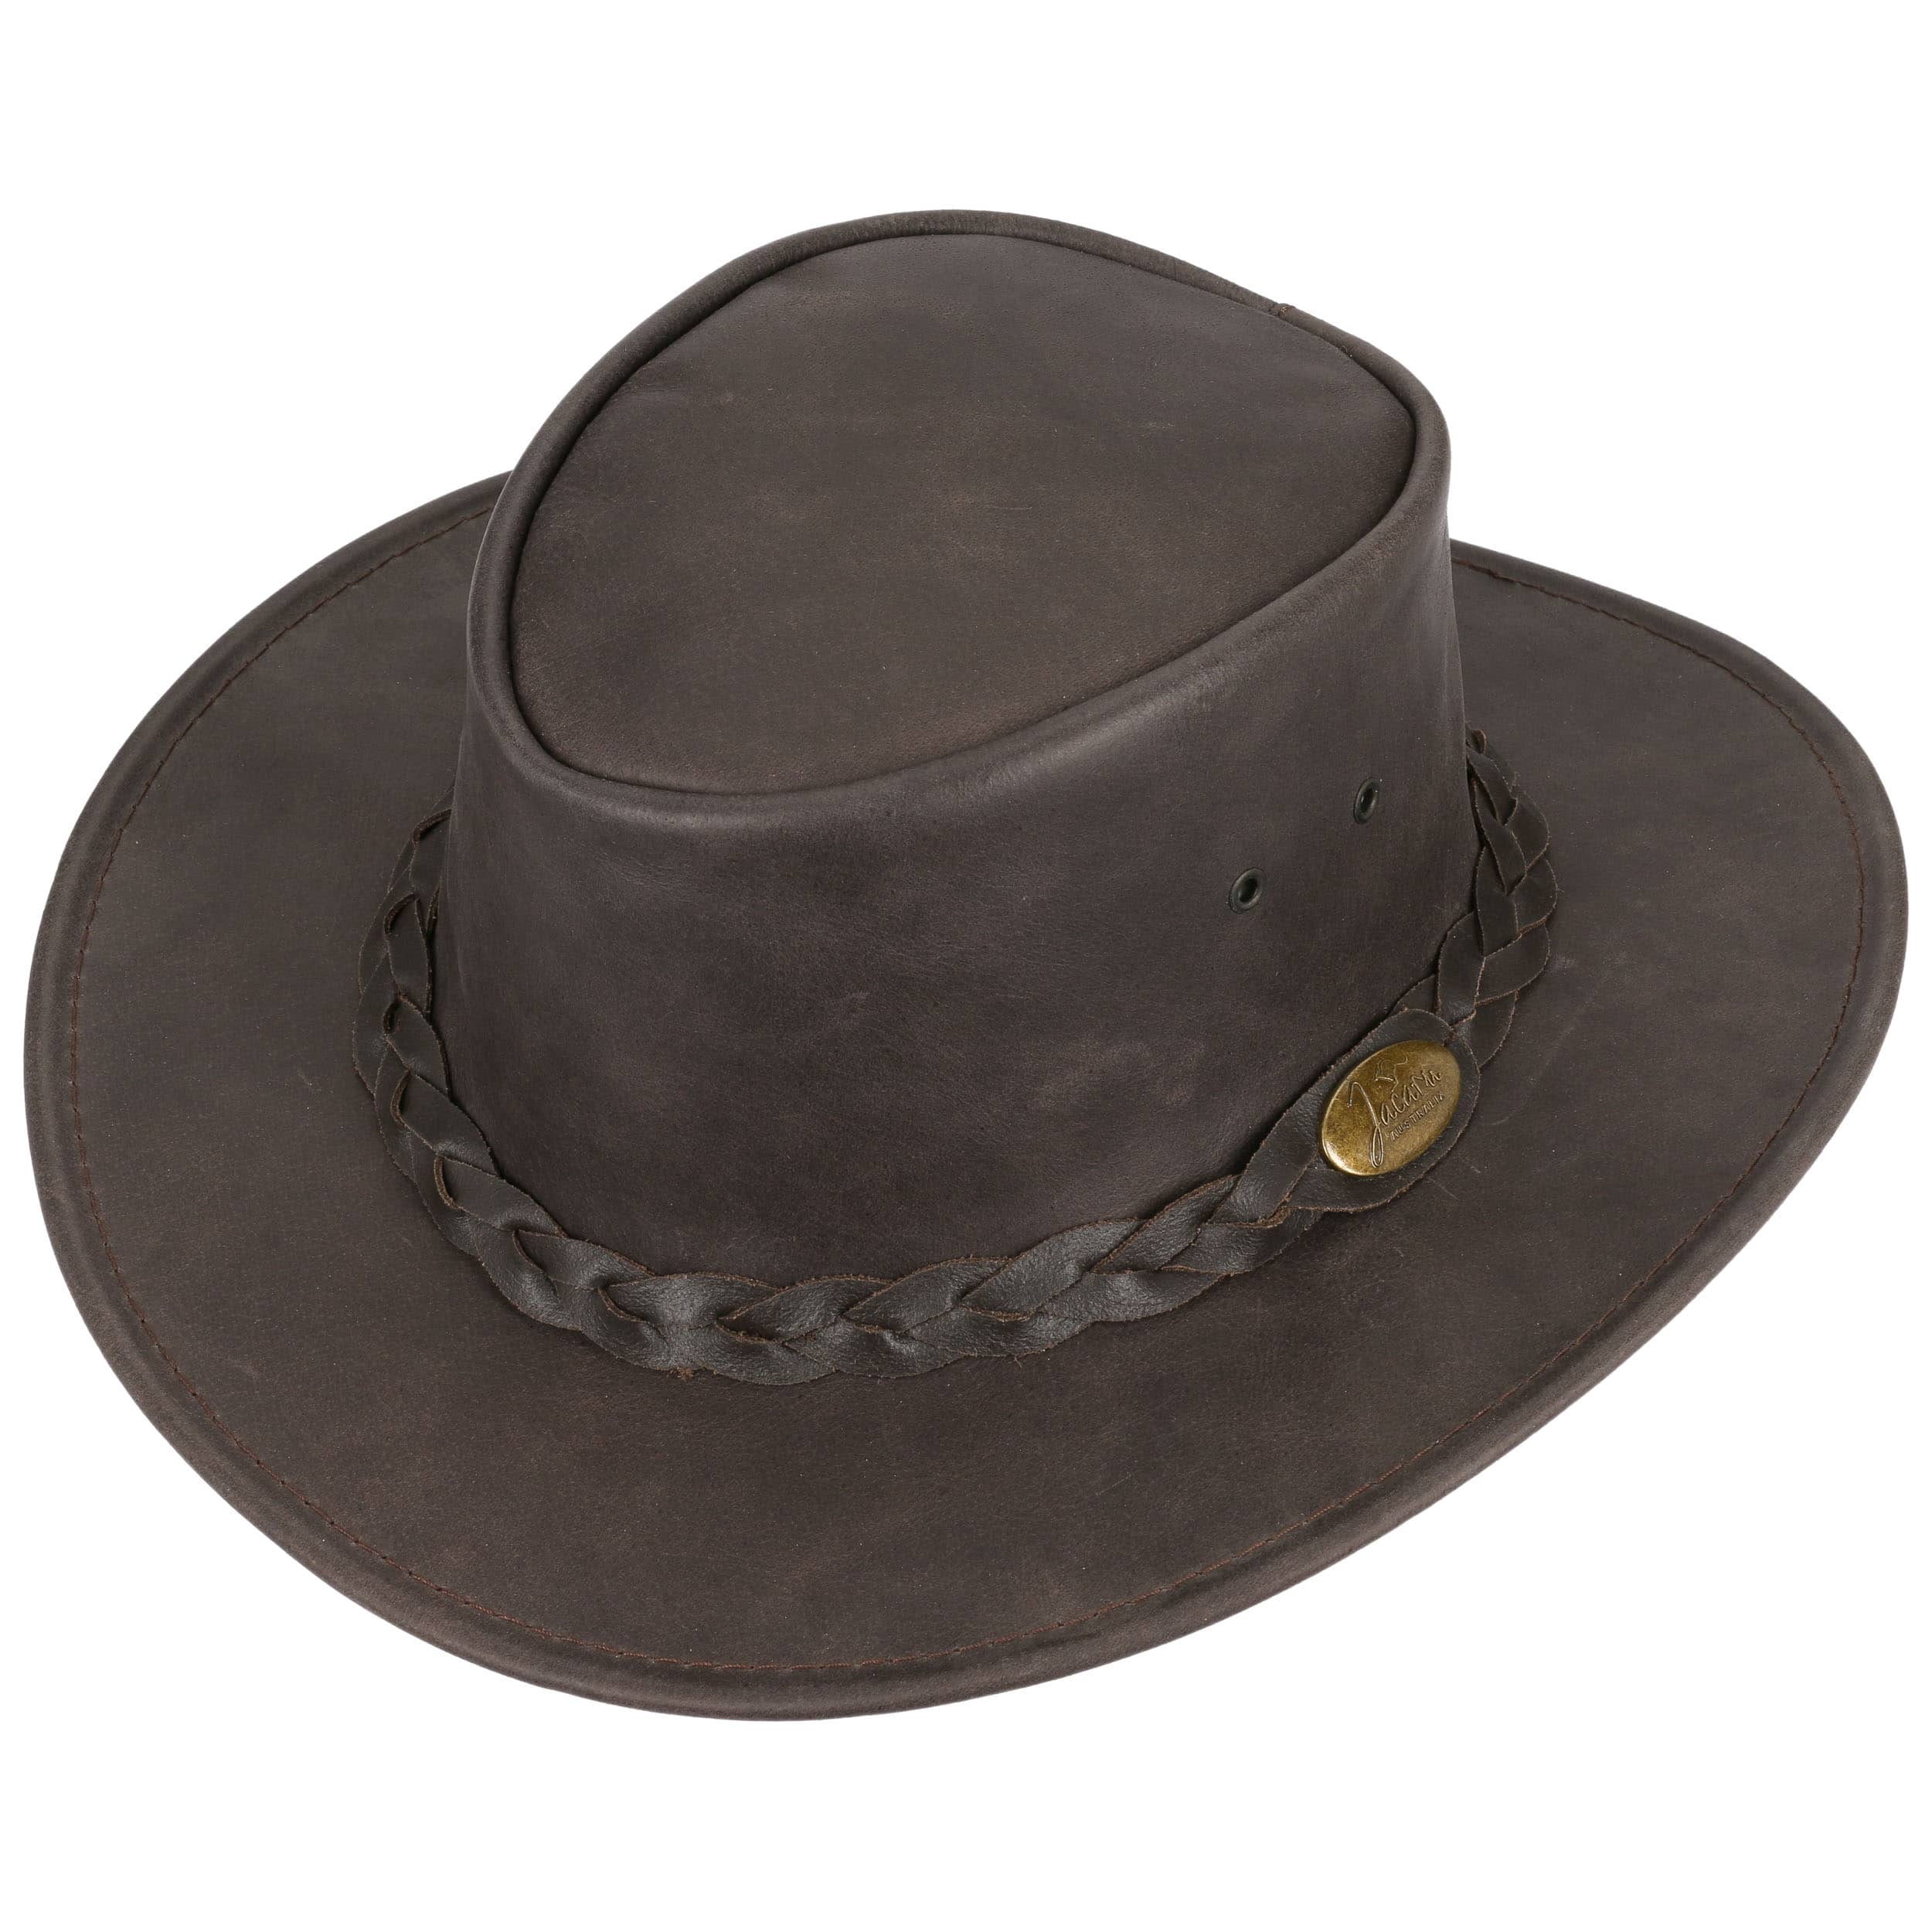 Buffalo Cambridge Leather Hat by Jacaru - 86,95